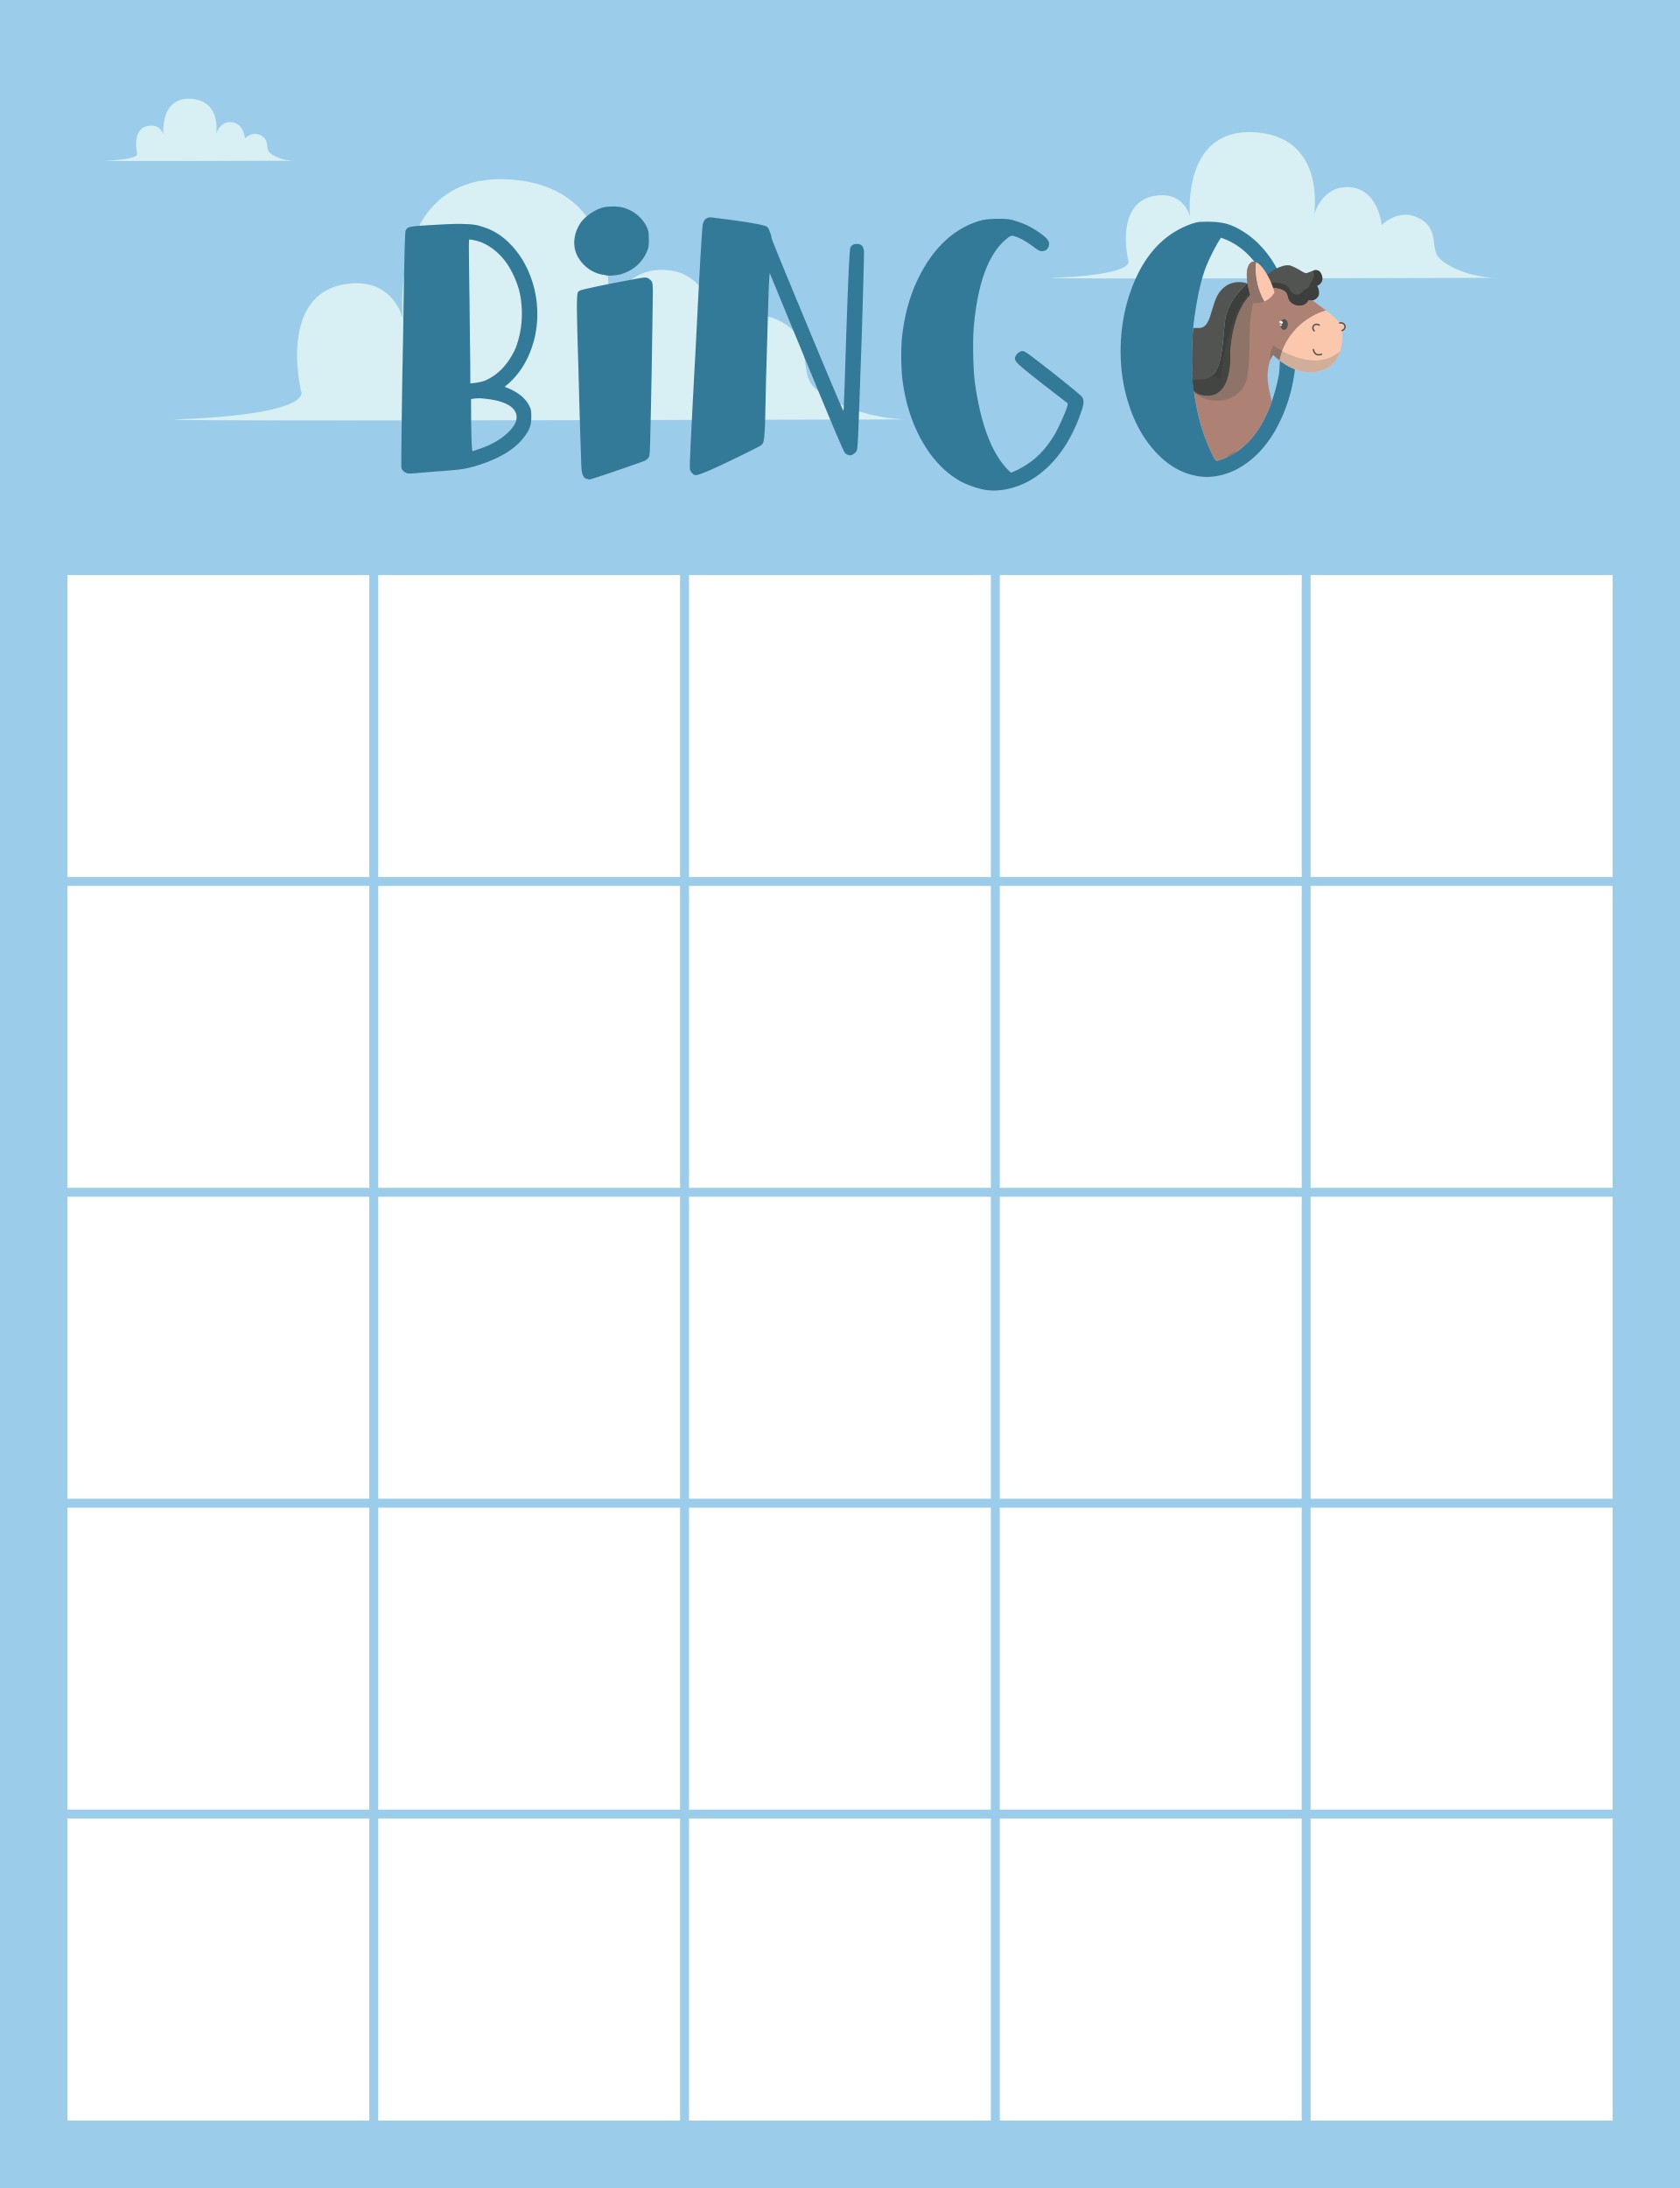 Printable Bingo Pattern Examples